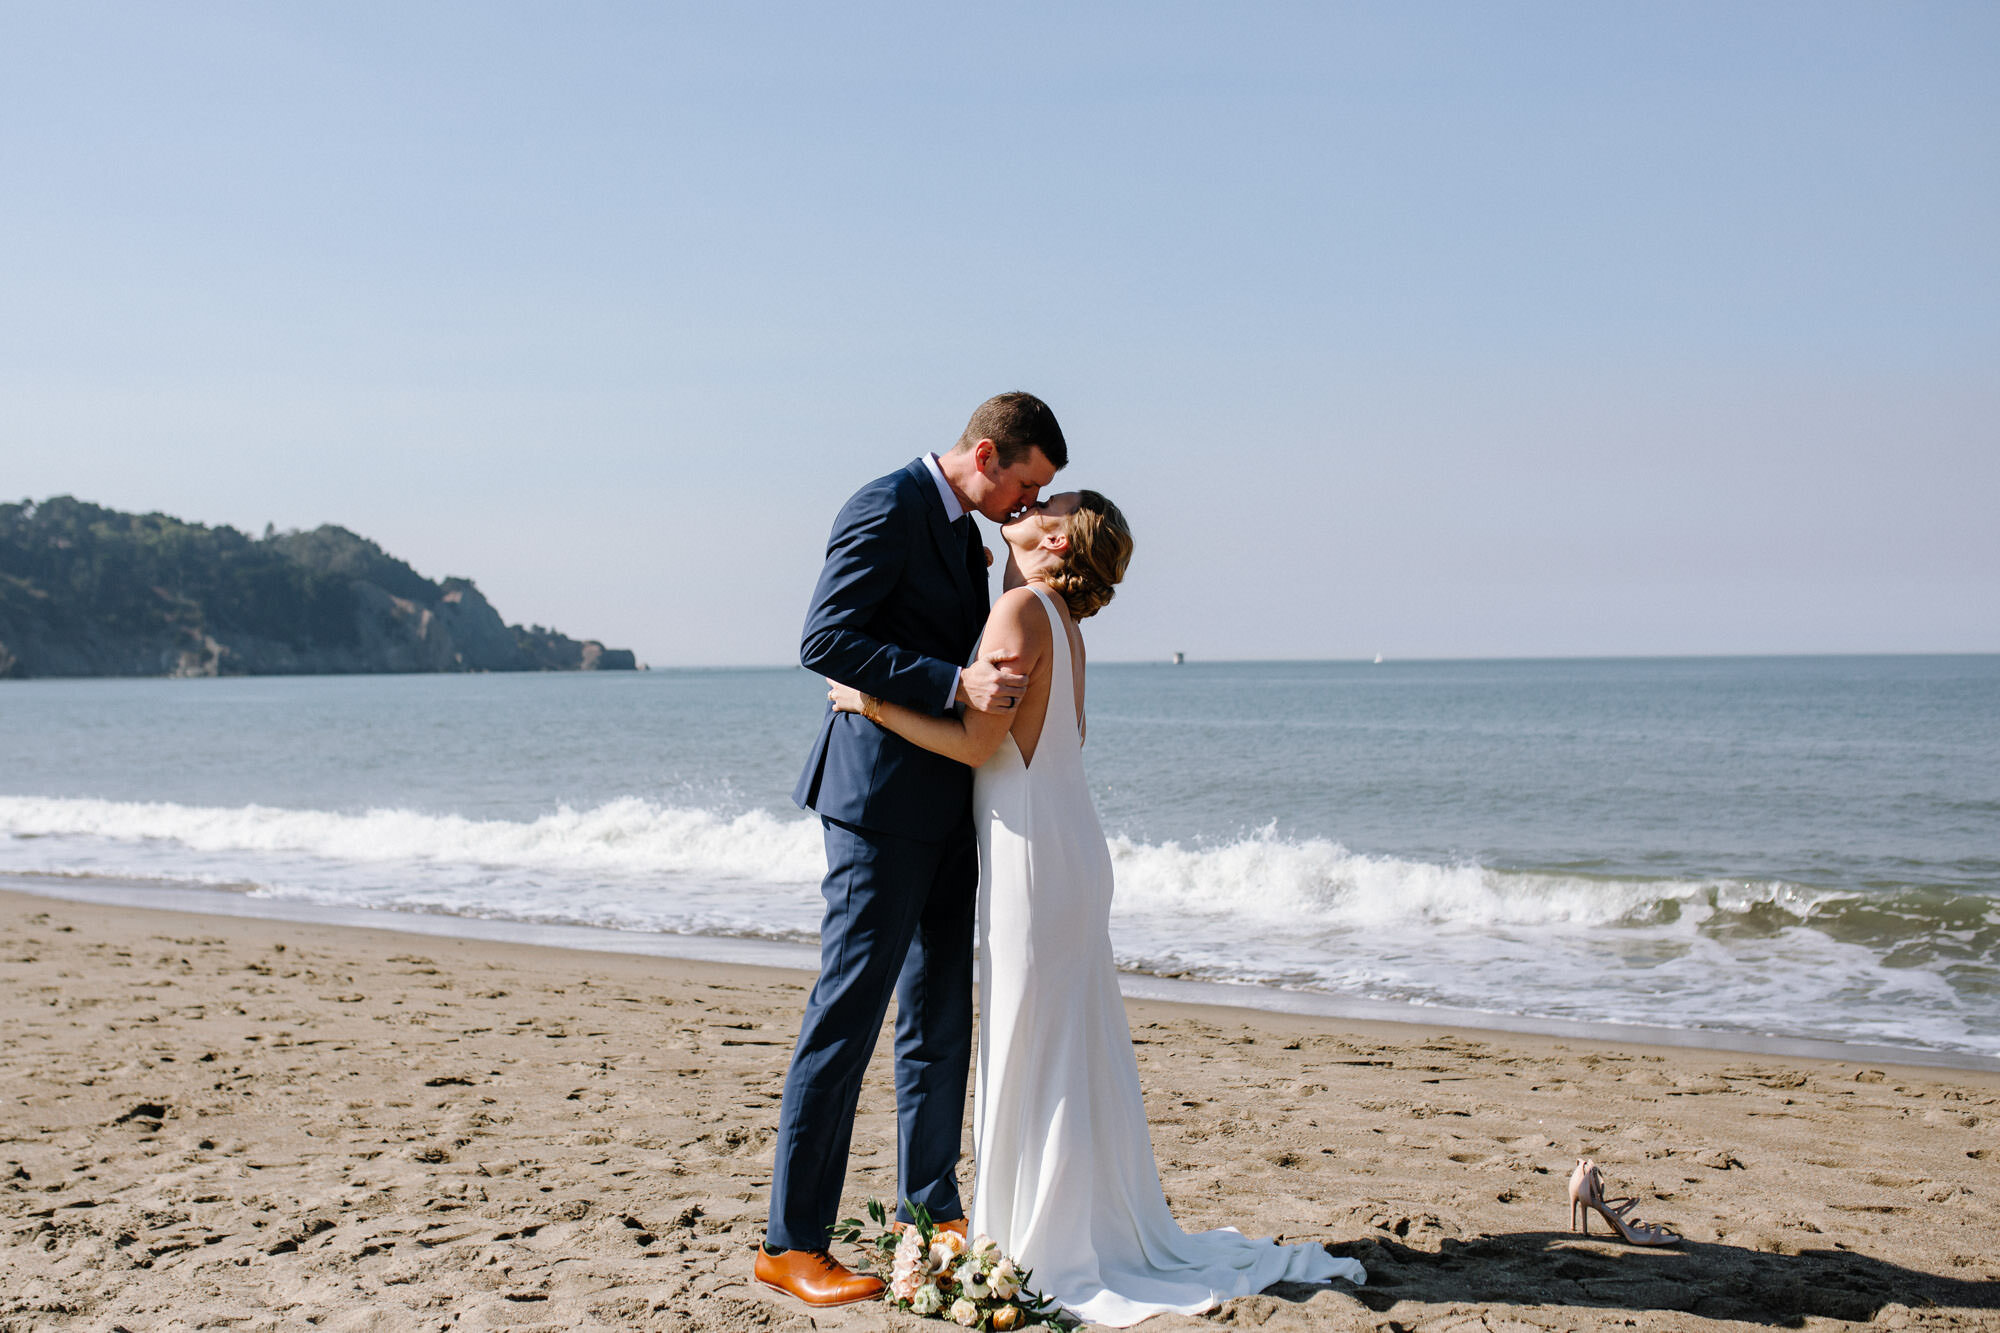 melissa-habegger-baker-beach-wedding-vows-013.jpg